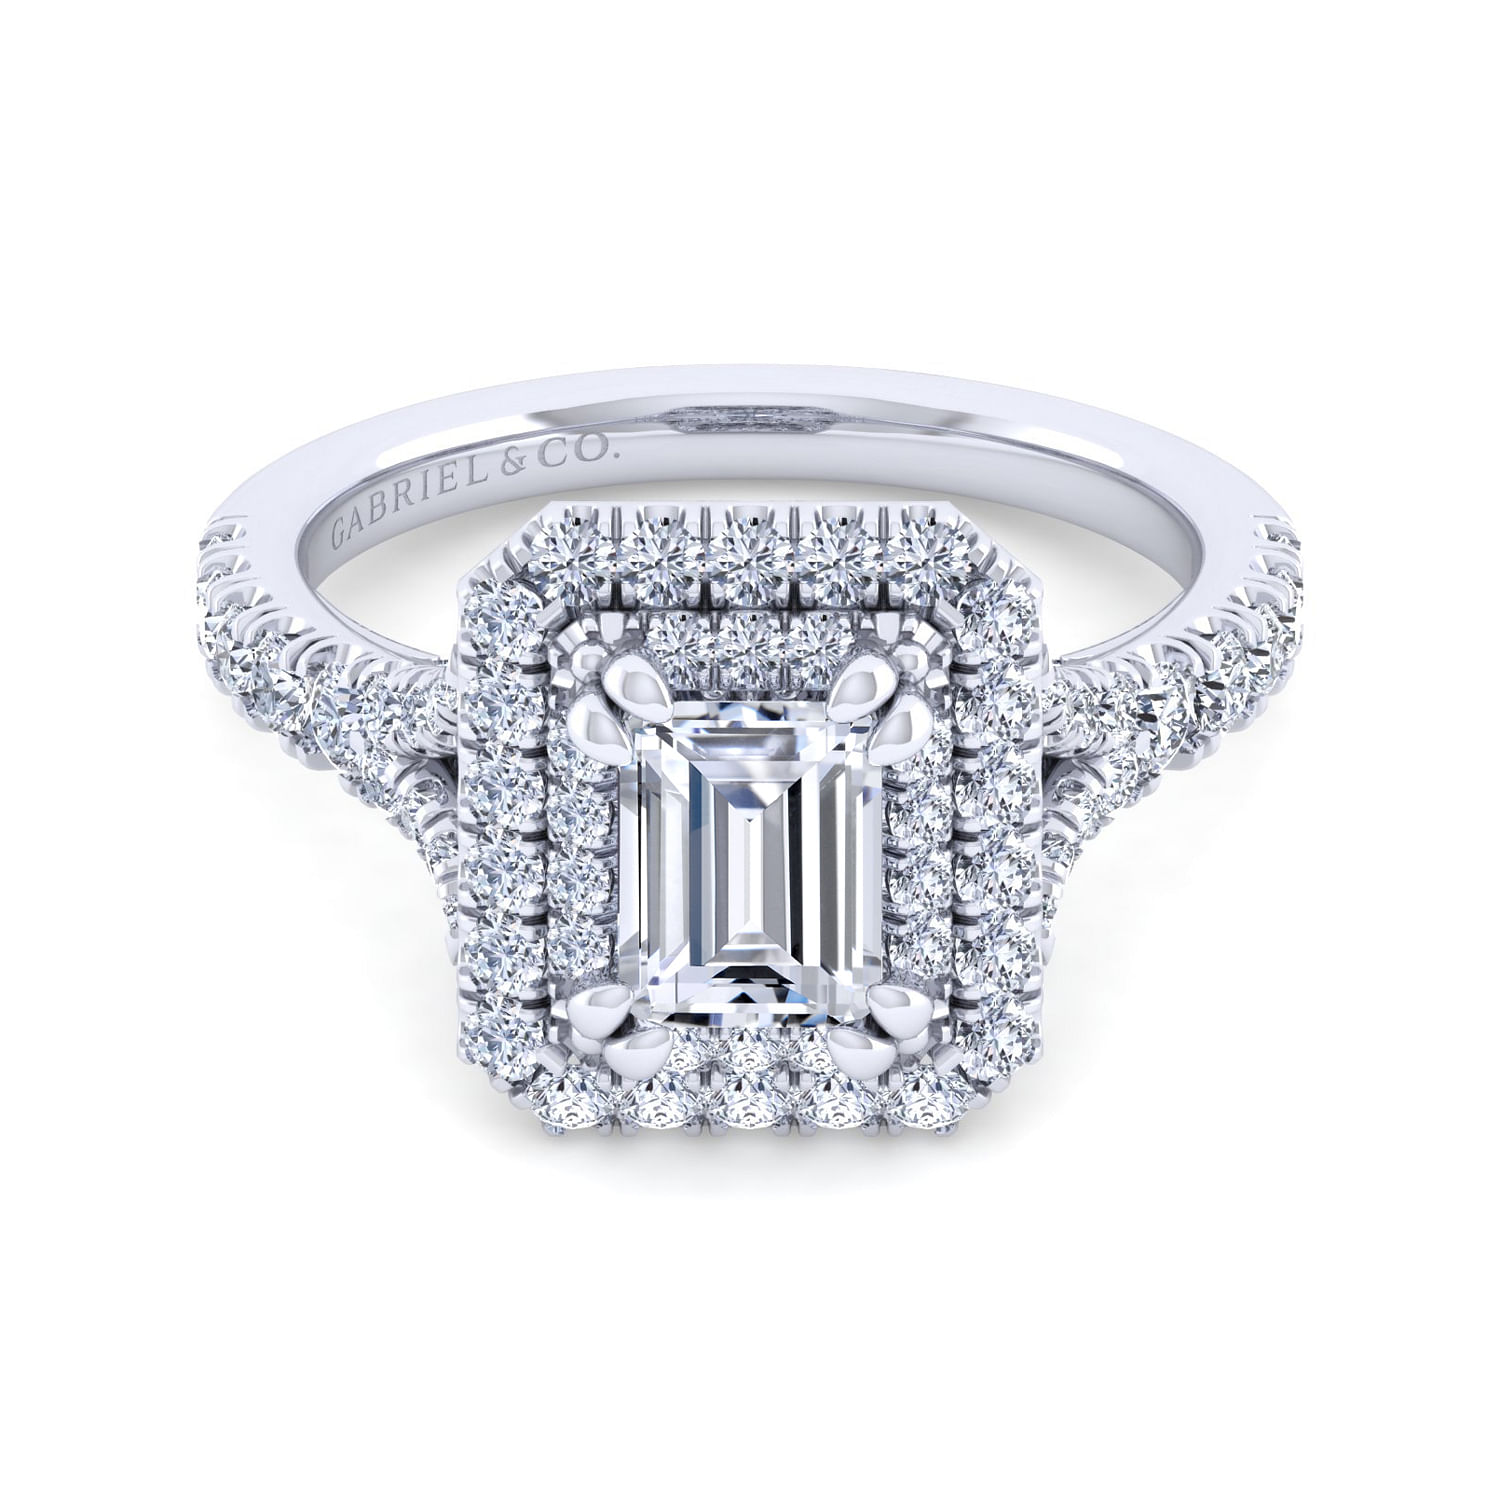 Sequoia - 14K White Gold Double Halo Emerald Cut Diamond Engagement Ring